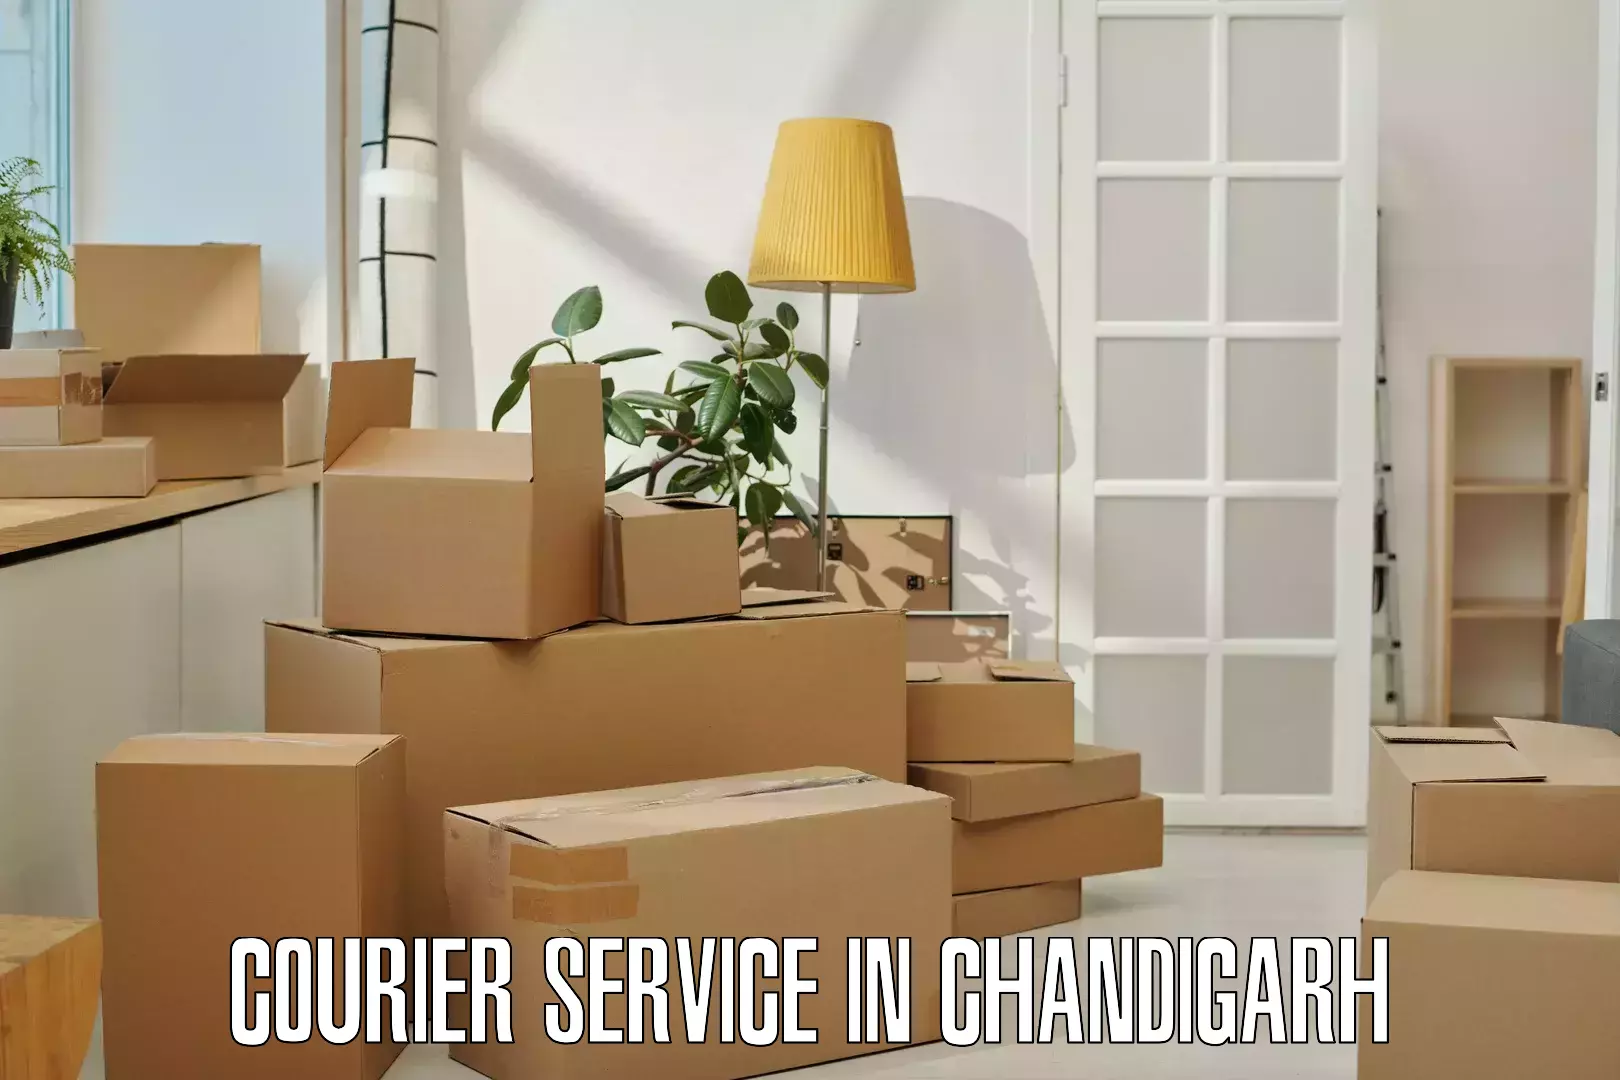 Speedy delivery service in Chandigarh